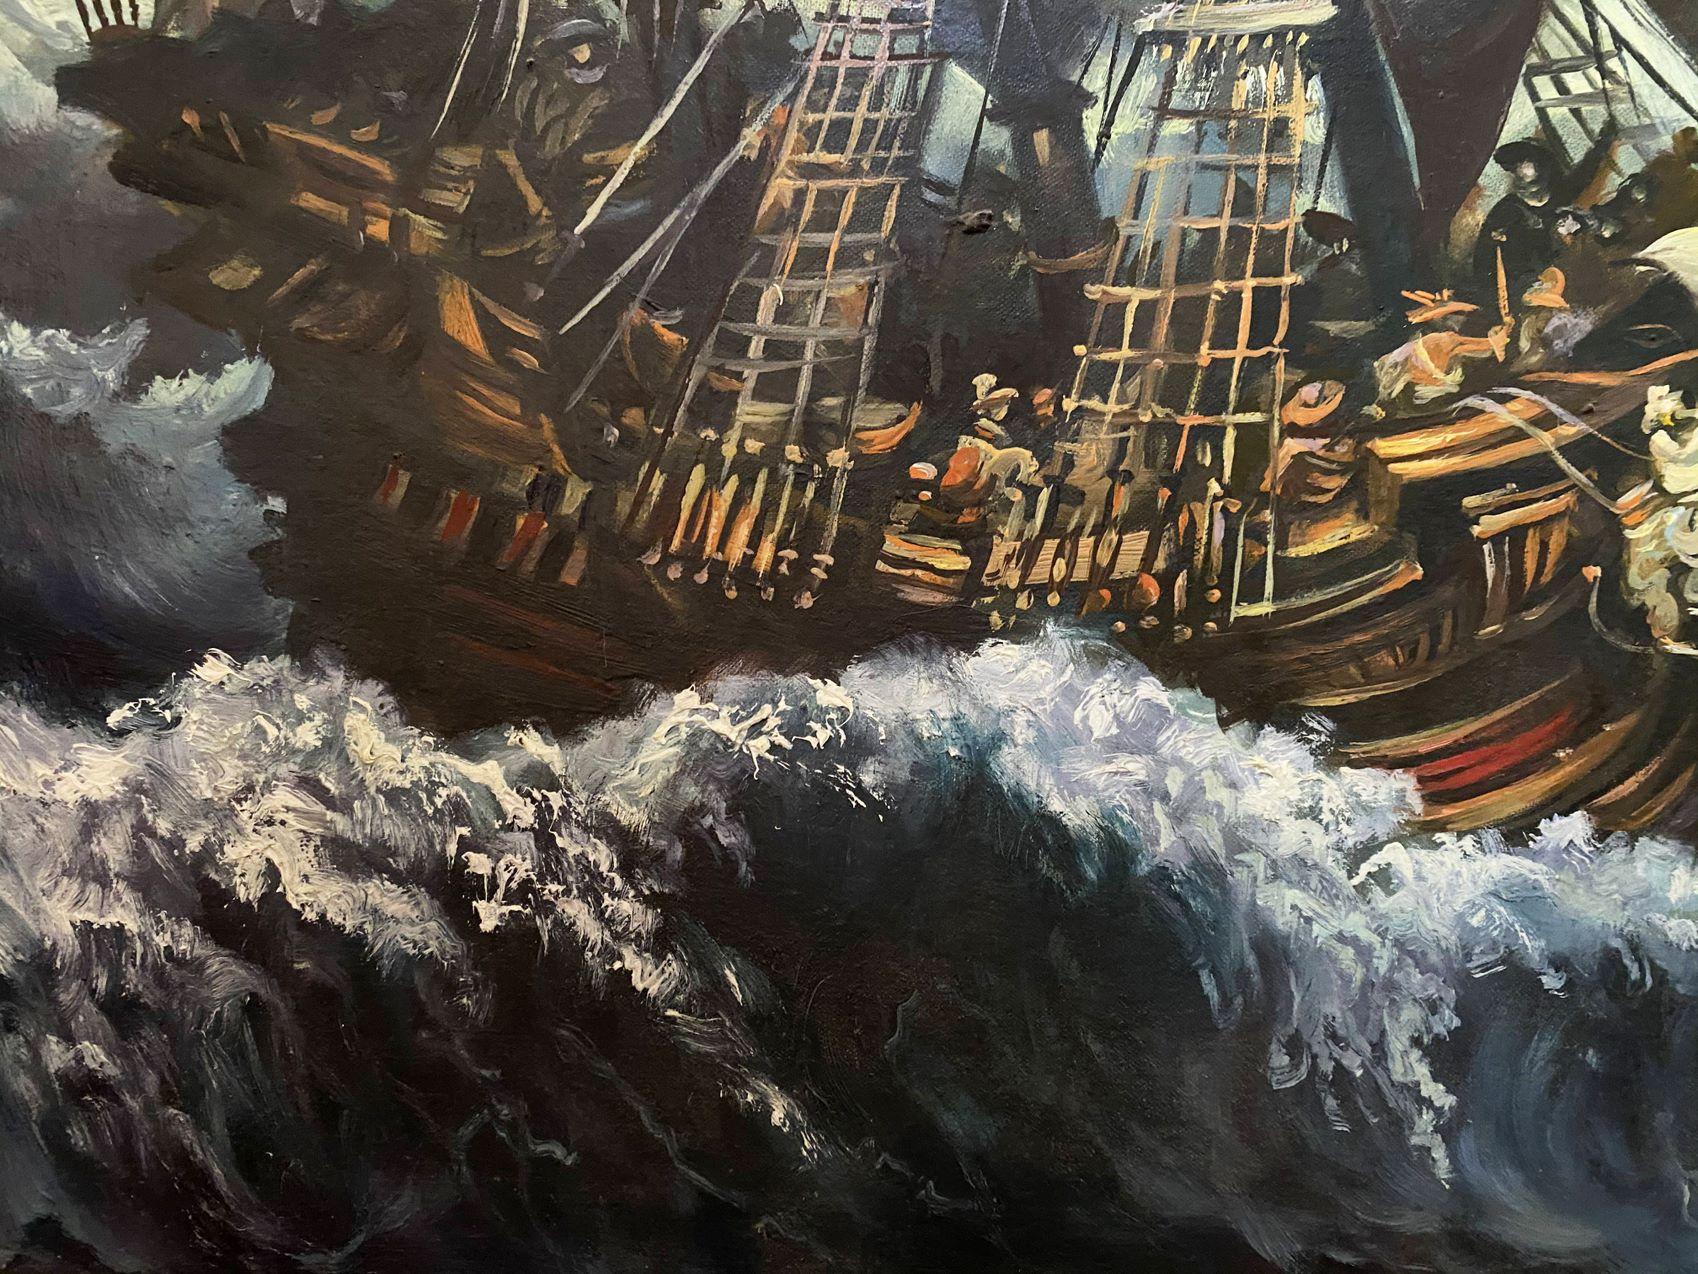 Artist: Alexander Litvinov
Work: Original oil painting, handmade artwork, one of a kind 
Medium: Oil on Canvas
Style: Classic Figurative
Year: 2009
Title: 17th Century Ships
Size: 19.5